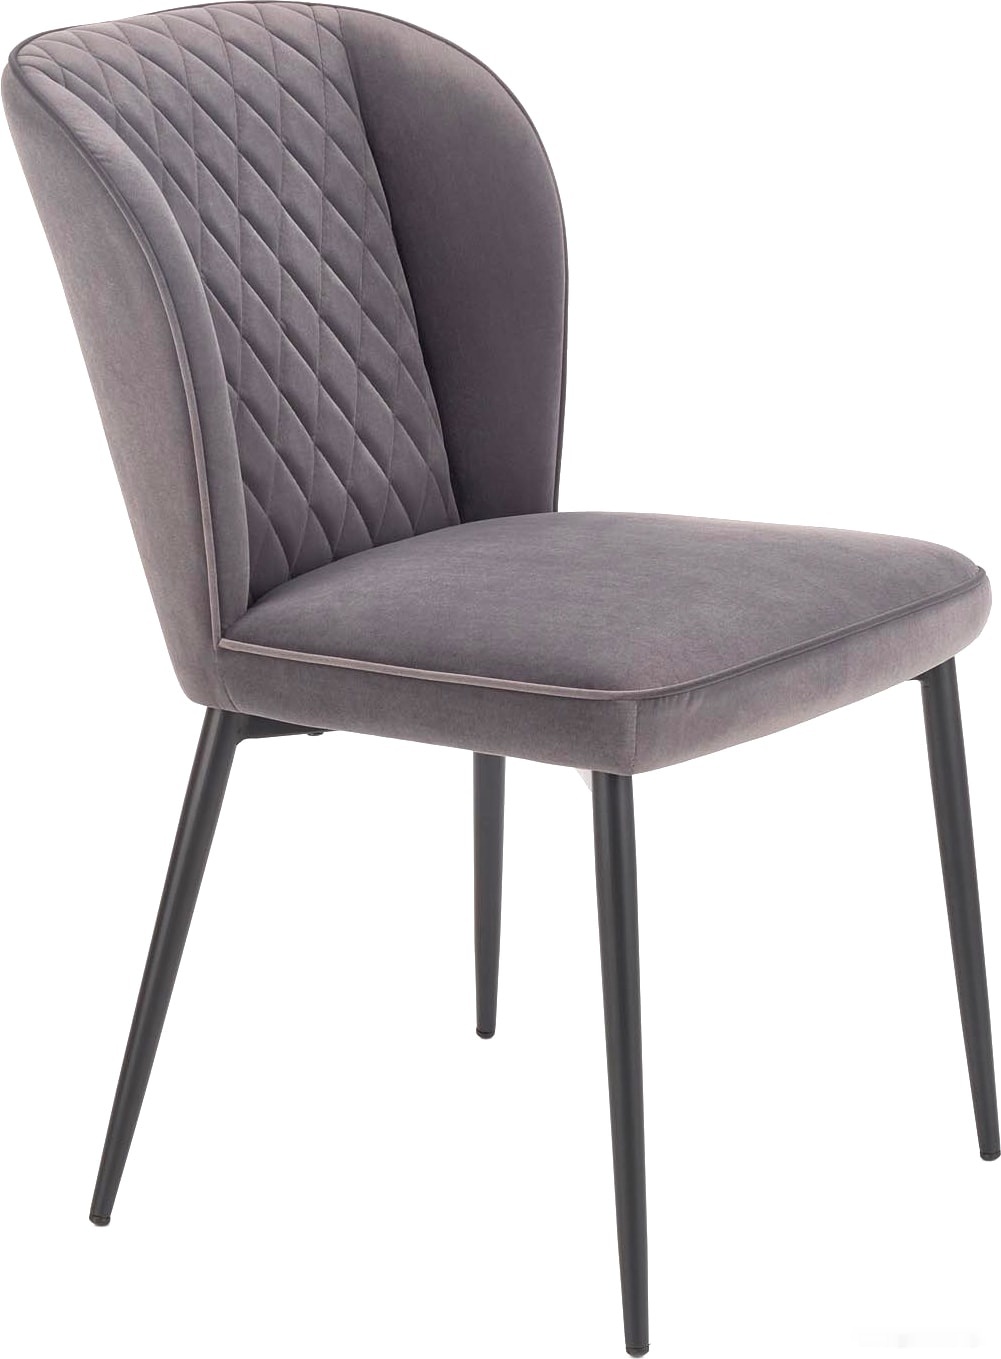 стул halmar k399 (серый)